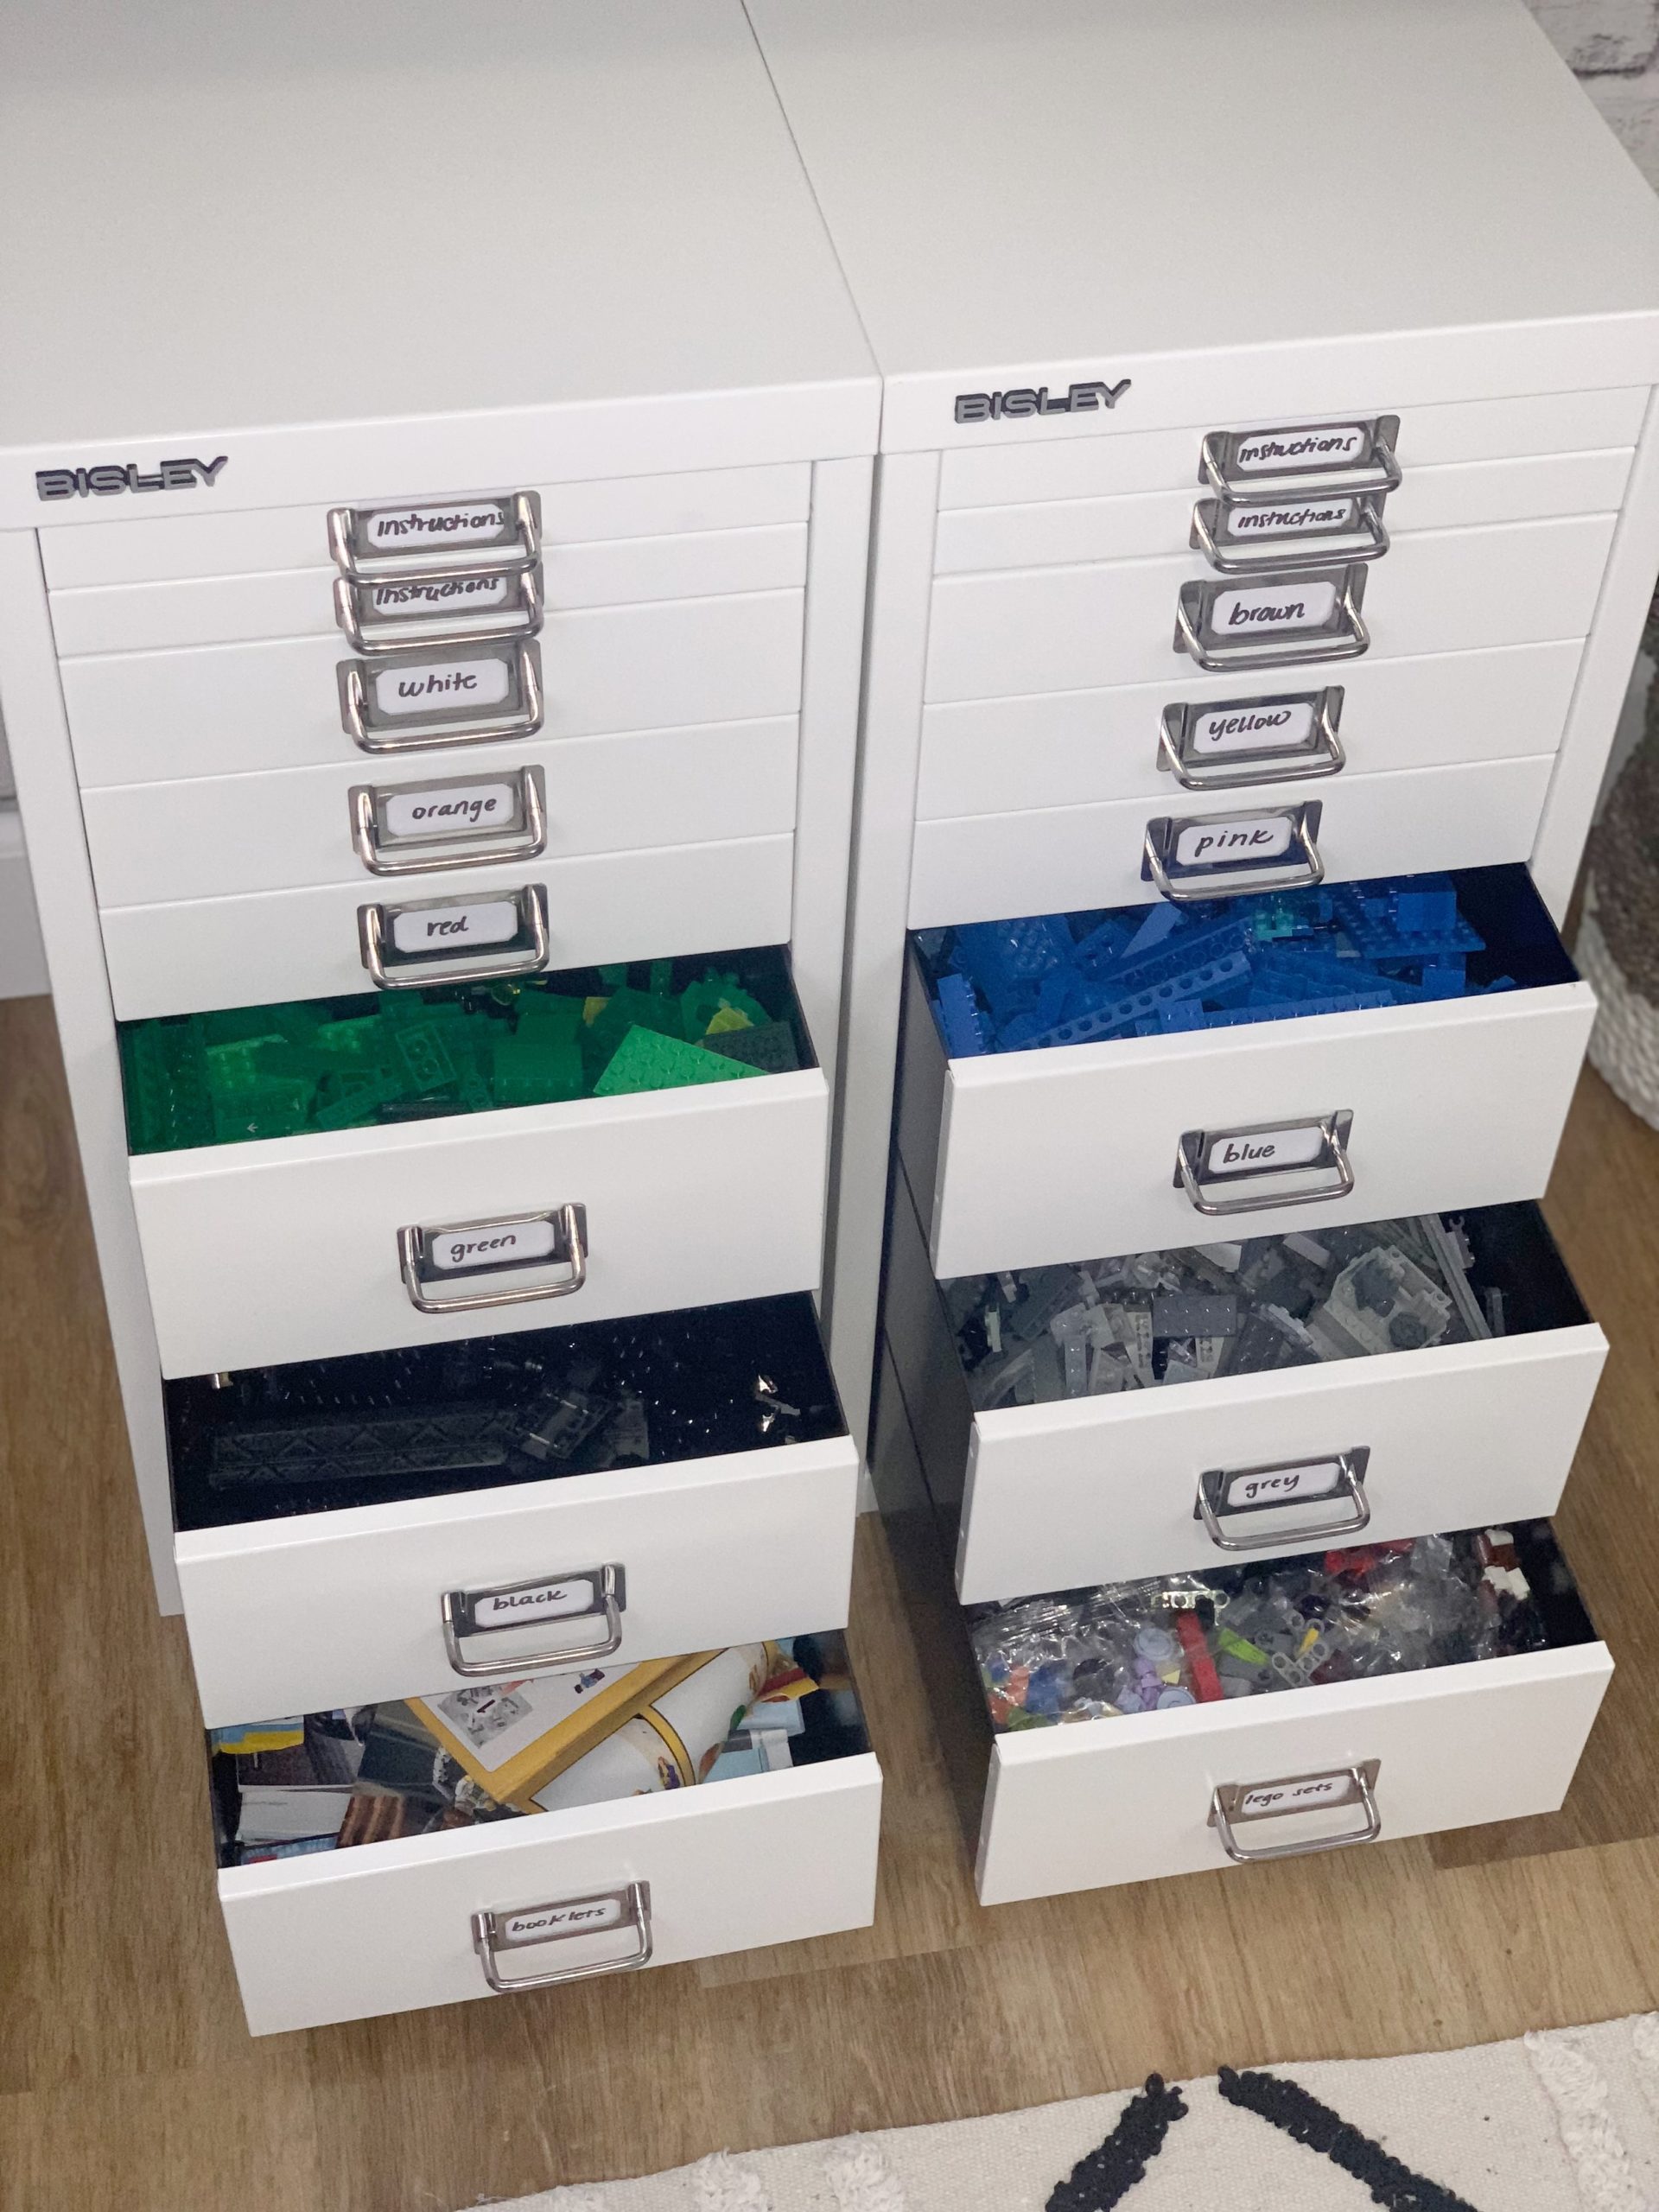 Lego Storage Ideas and Organization Tips - Caitlin Marie Design